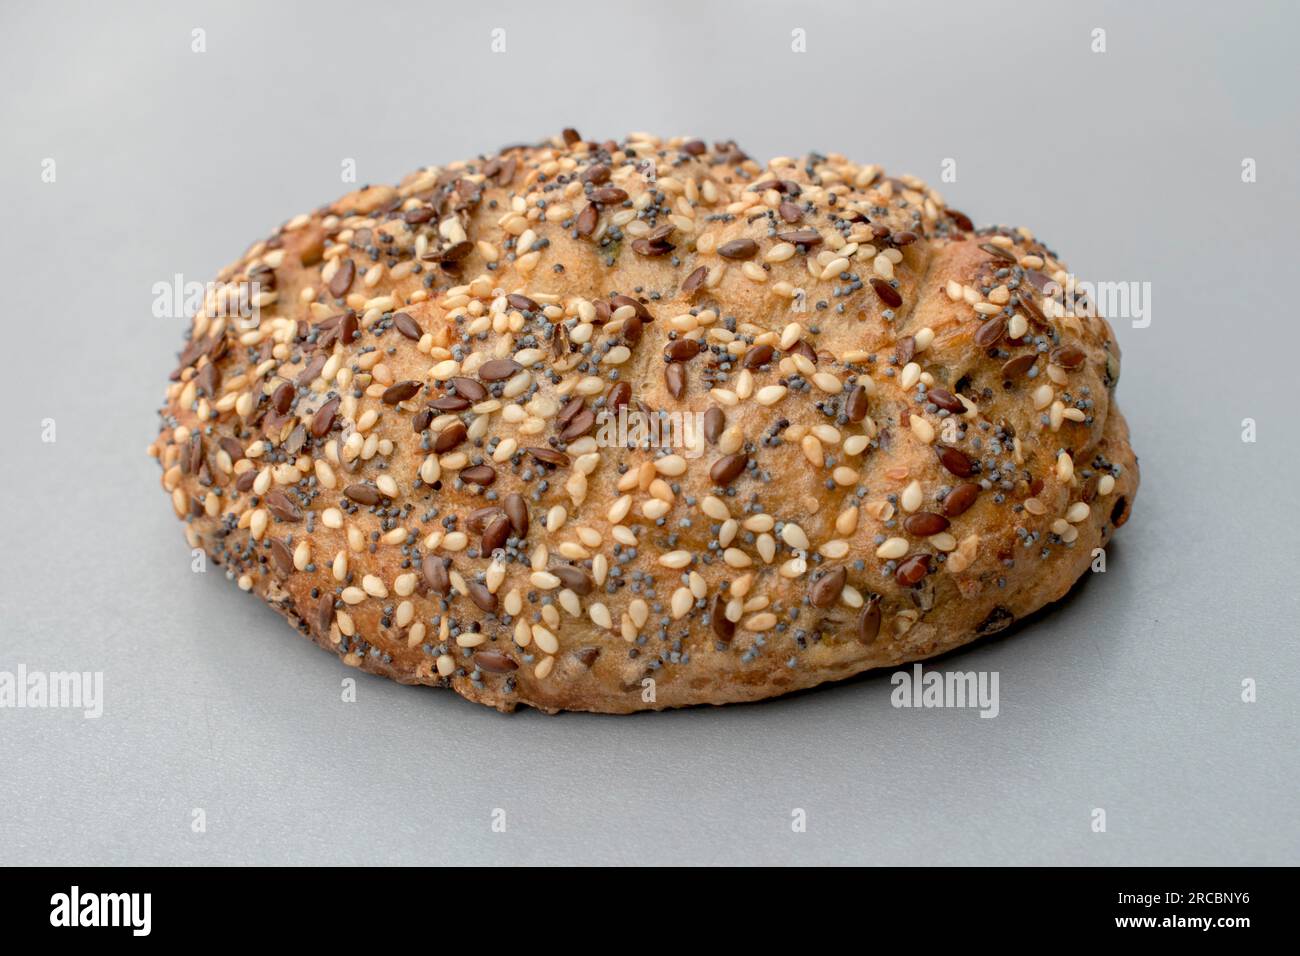 Rotoli di proteine: Il pane è ideale per una dieta vegana variegata grazie alle sue fonti proteiche puramente vegetali. Piselli ricchi, semi freschi e farina di semi di zucca Foto Stock